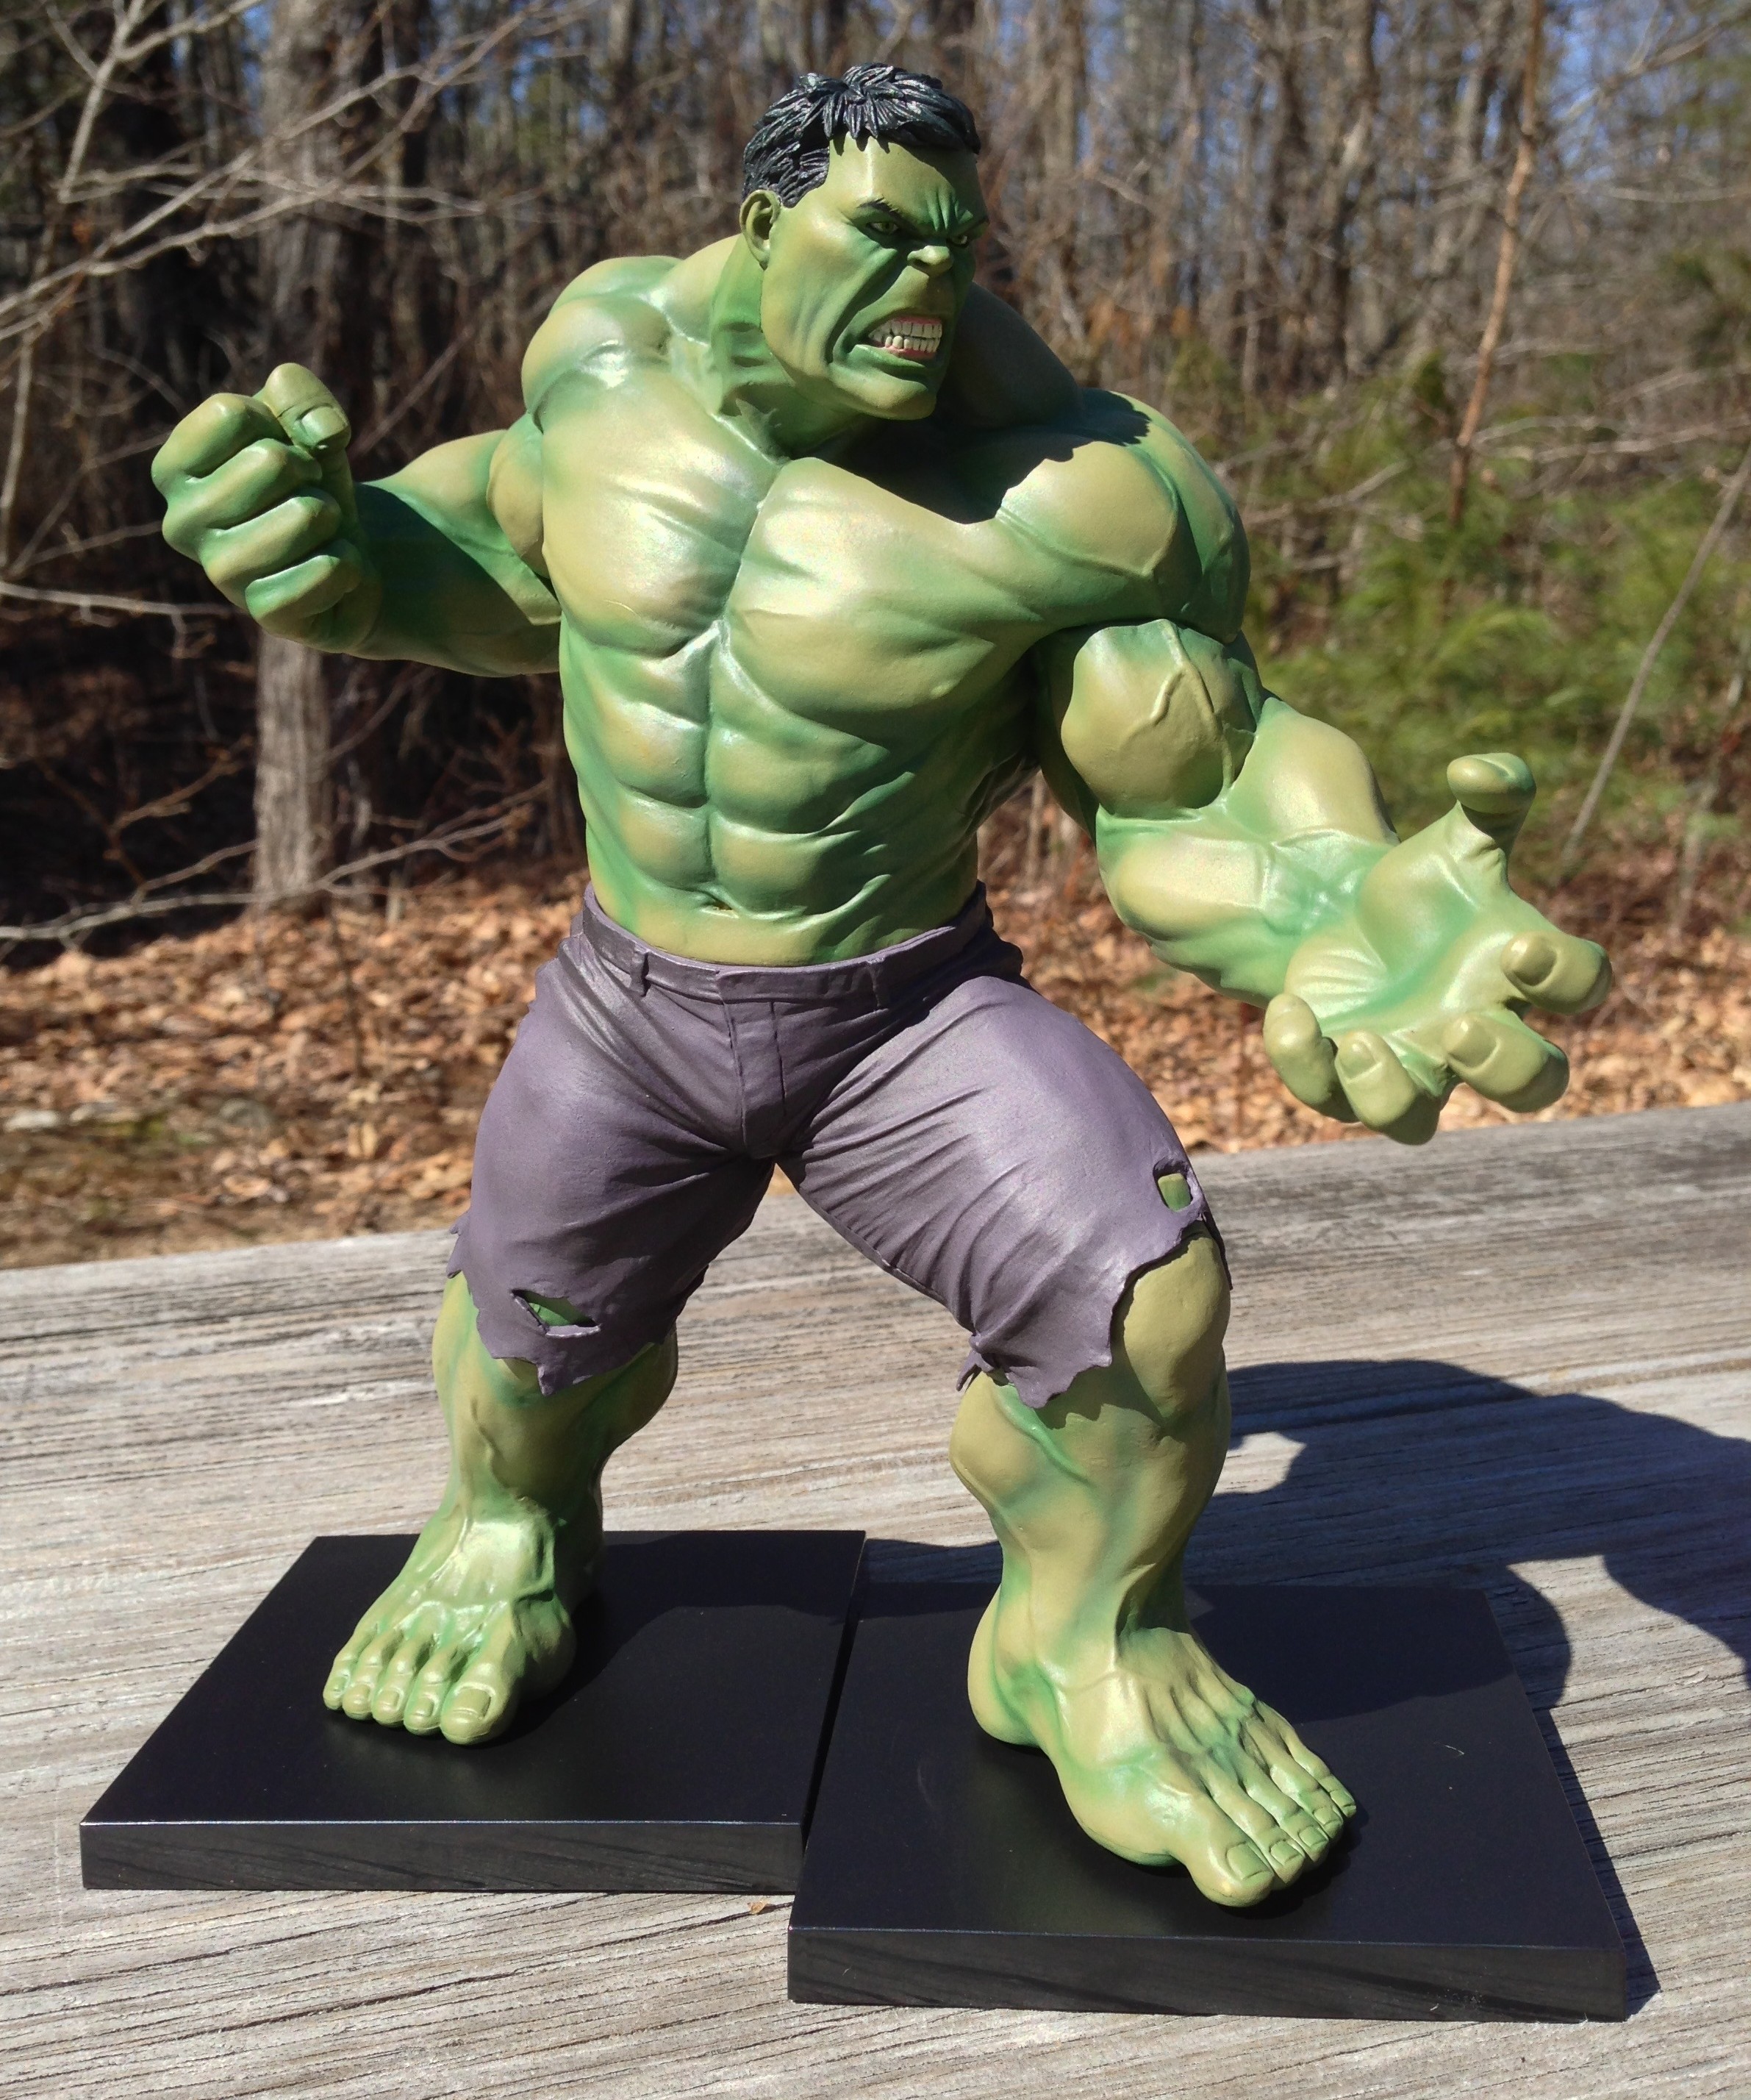 Avengers Kotobukiya Hulk ArtFX+ Statue Review & Photos - Marvel Toy News